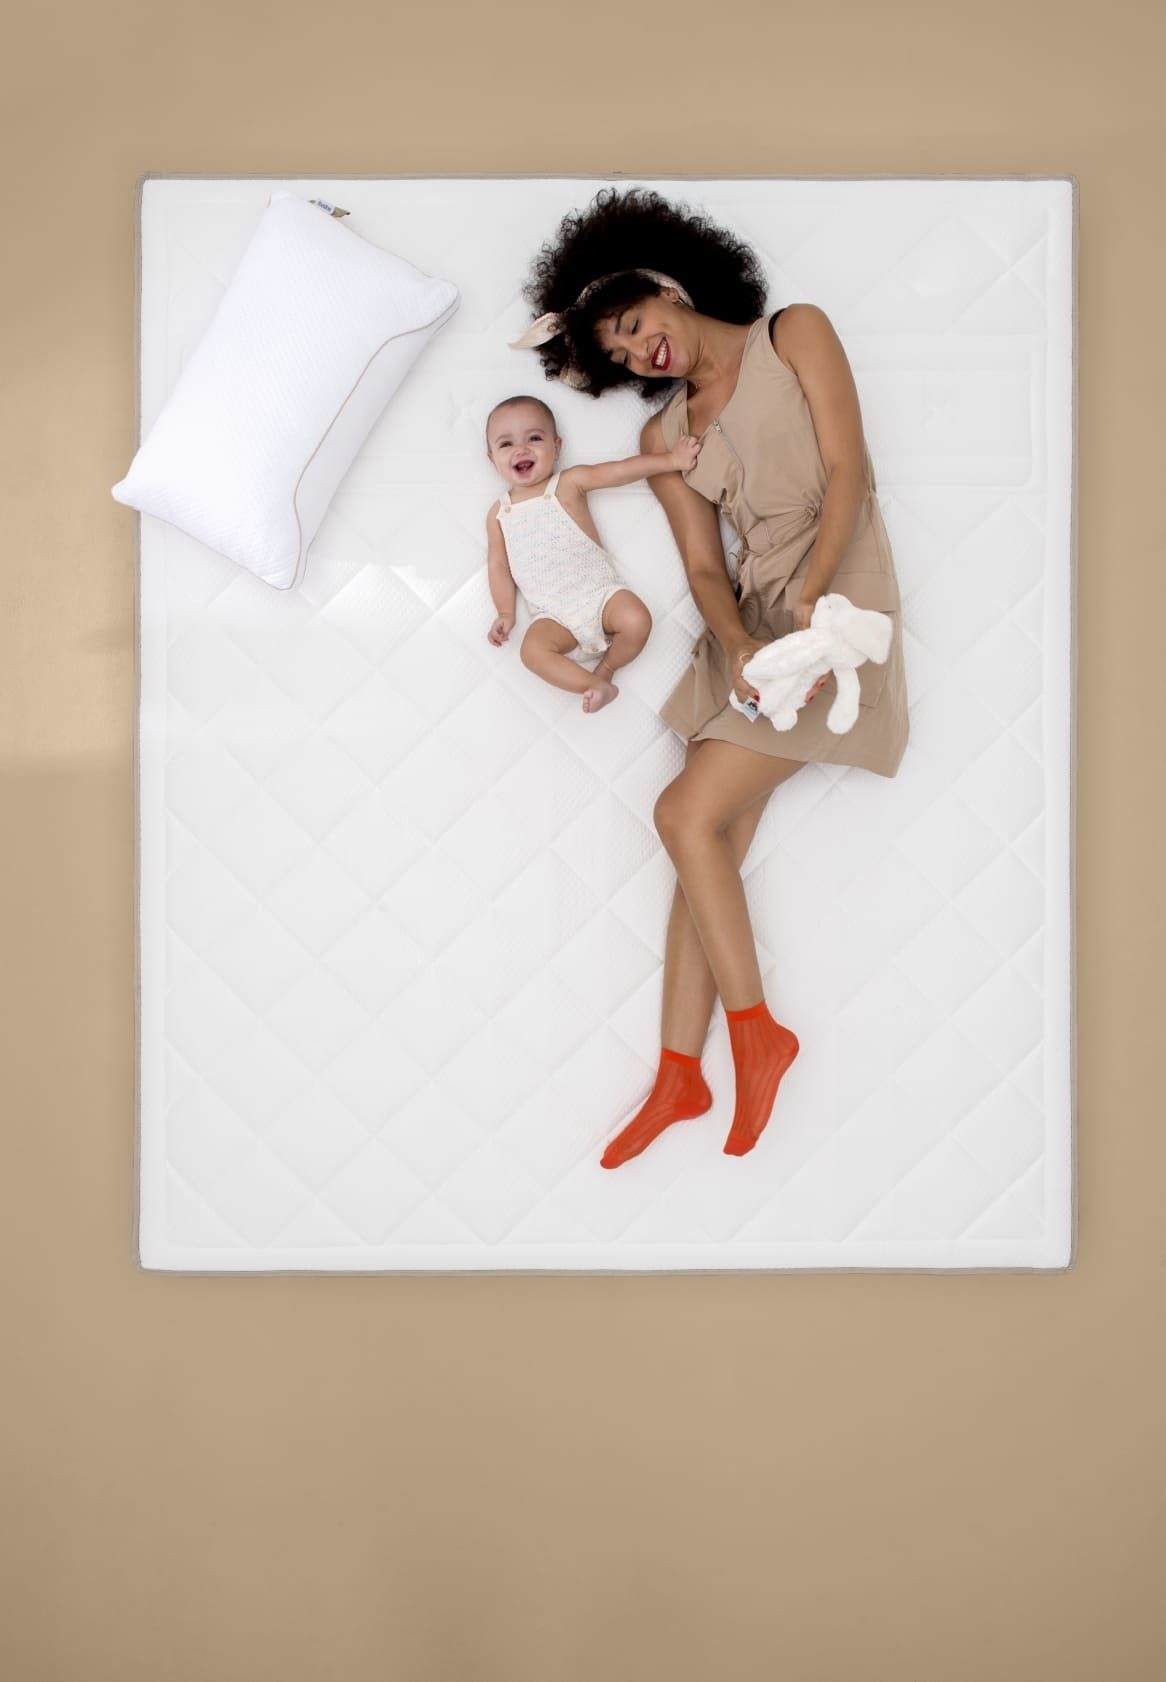 Frau mit Baby im Bett